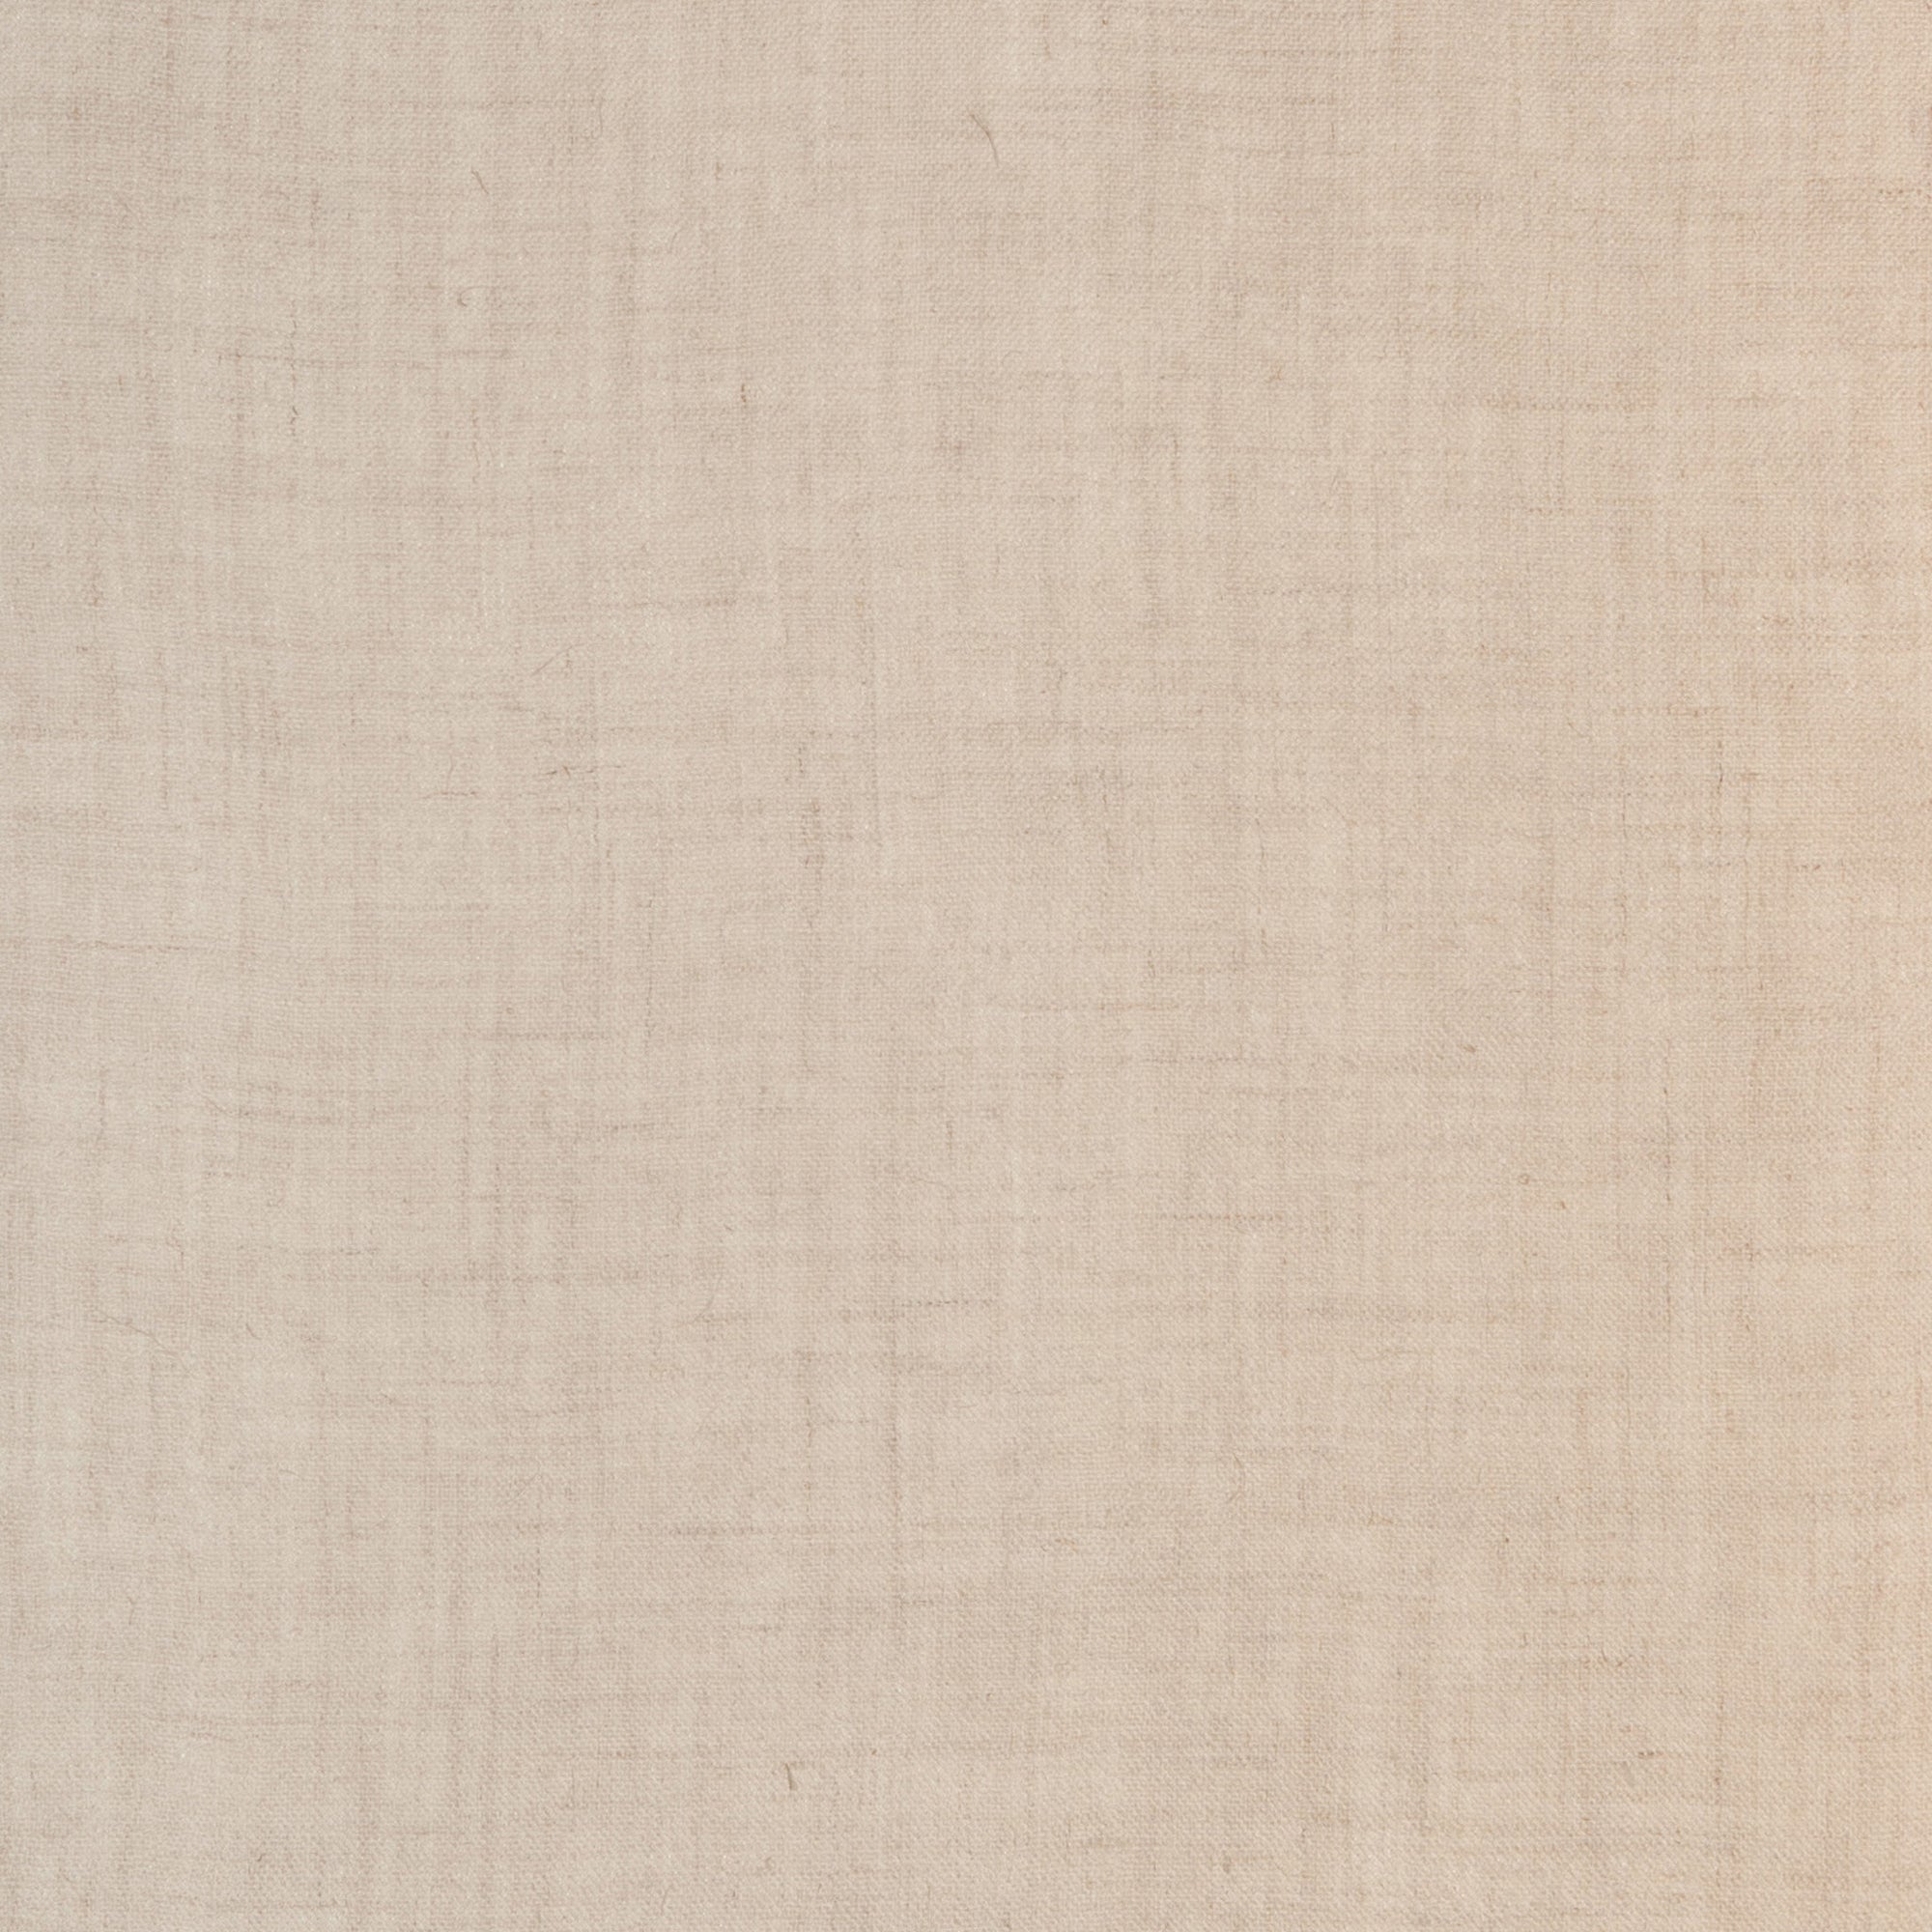 Alpaca Linen Solid Fabric - Rosemary Hallgarten